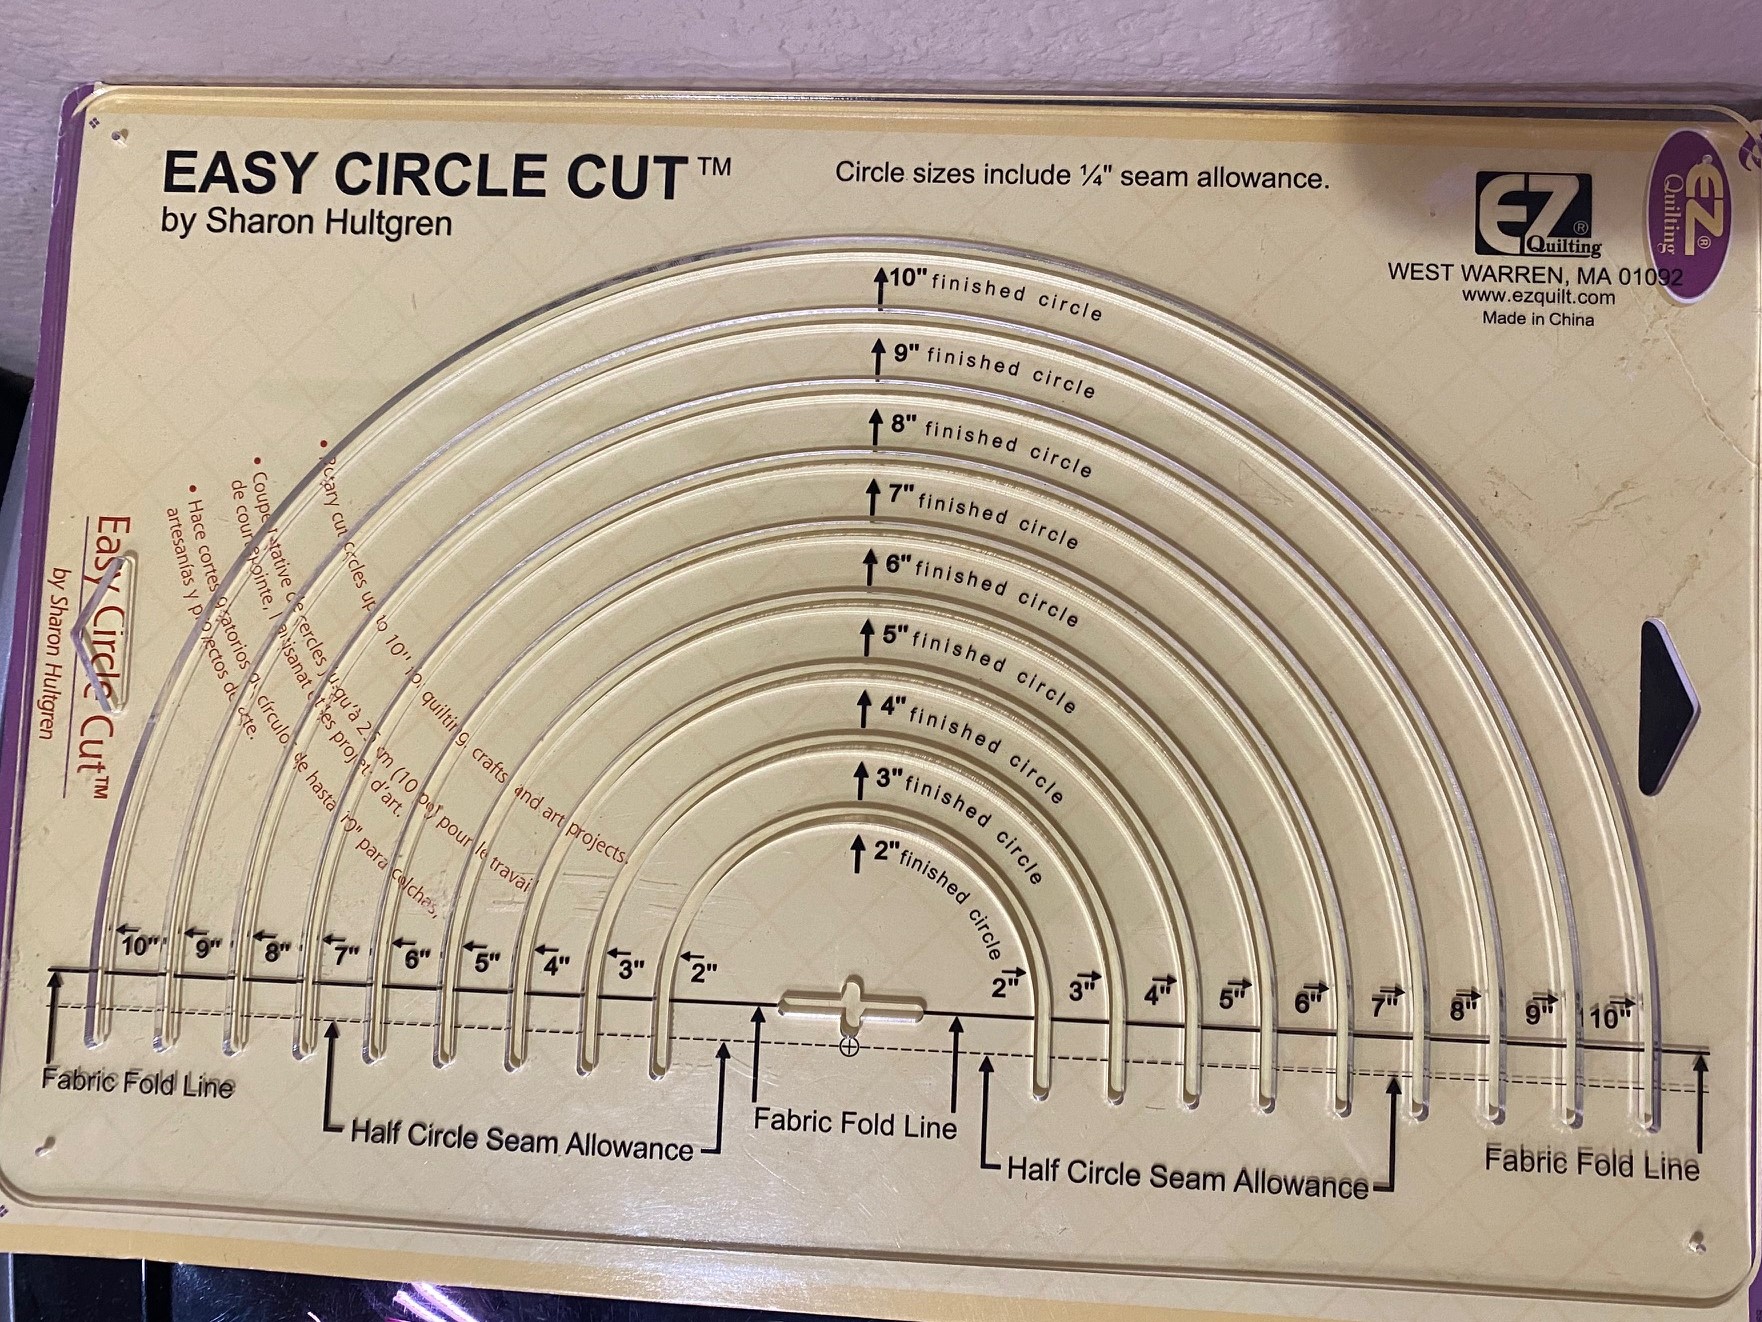 Echo quilting is easy with the handy Komfort KUT Slash-N-Circle Ruler